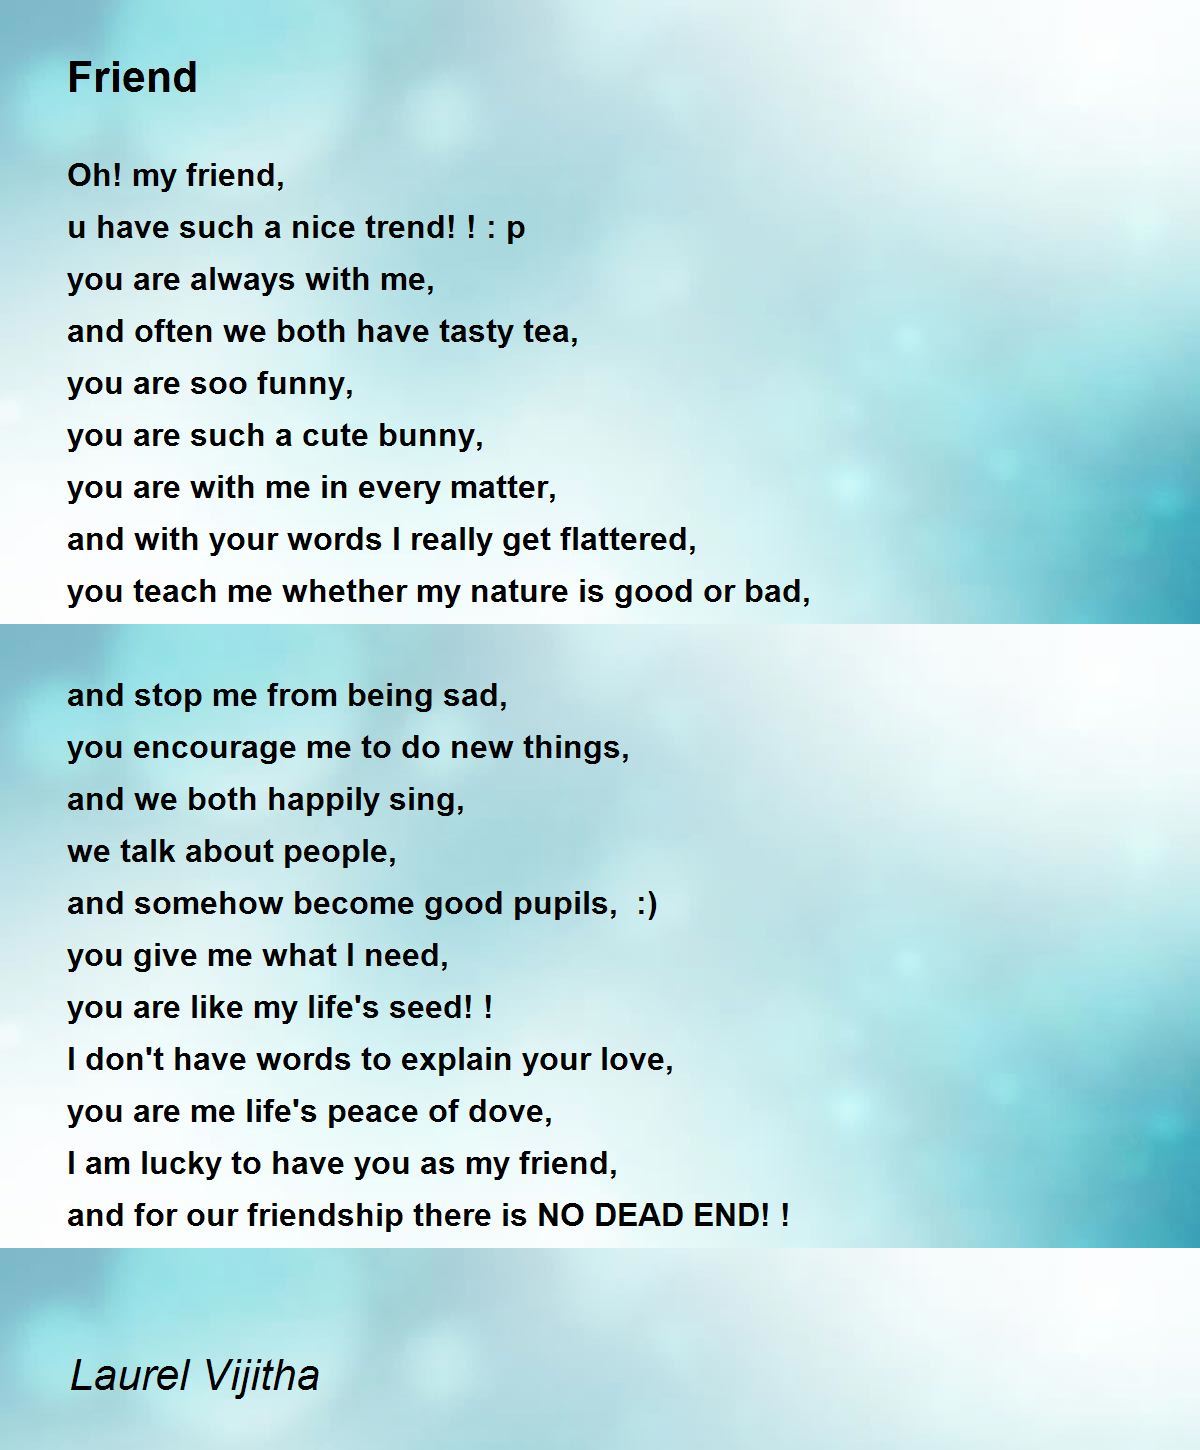 Friend - Friend Poem by Laurel Vijitha